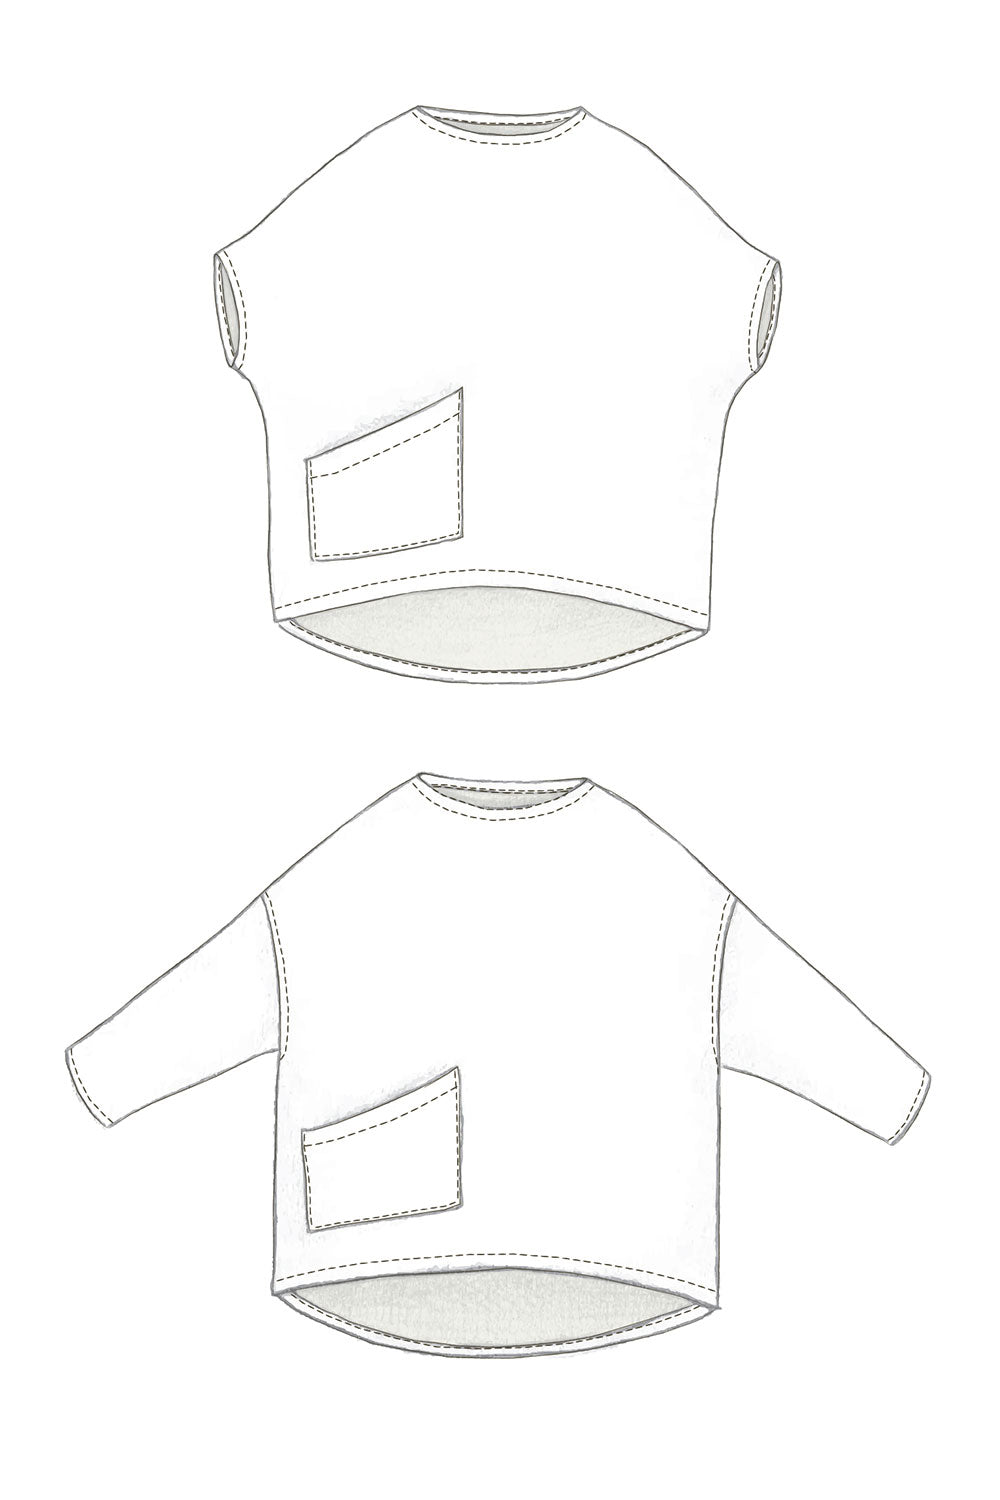 Harper Tunic Digital Sewing Pattern